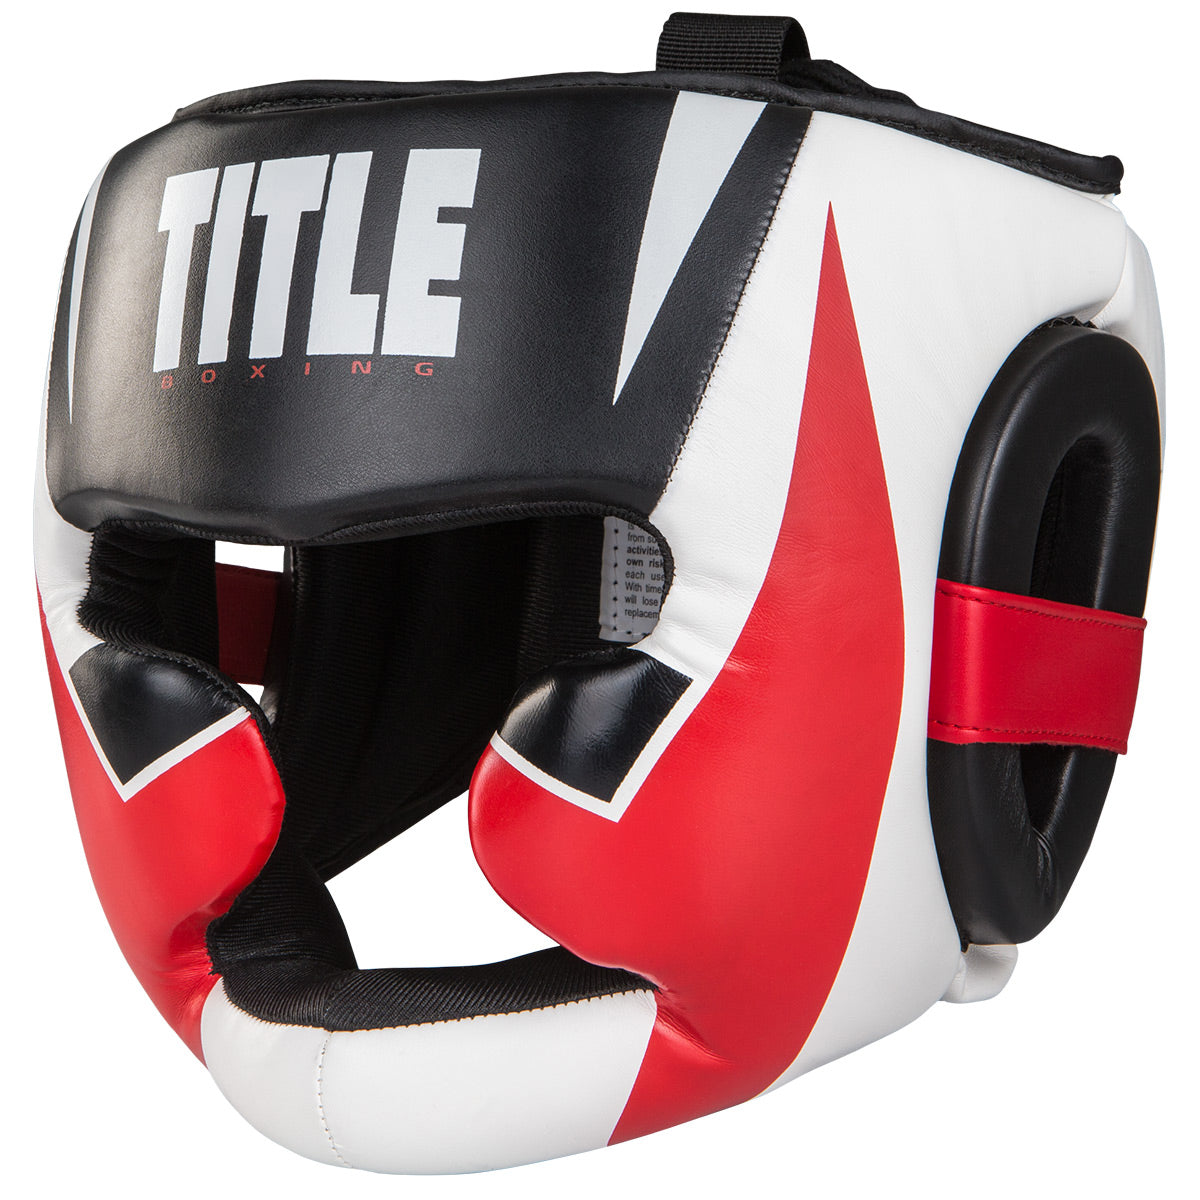 TITLE MMA Command Full Training Headgear